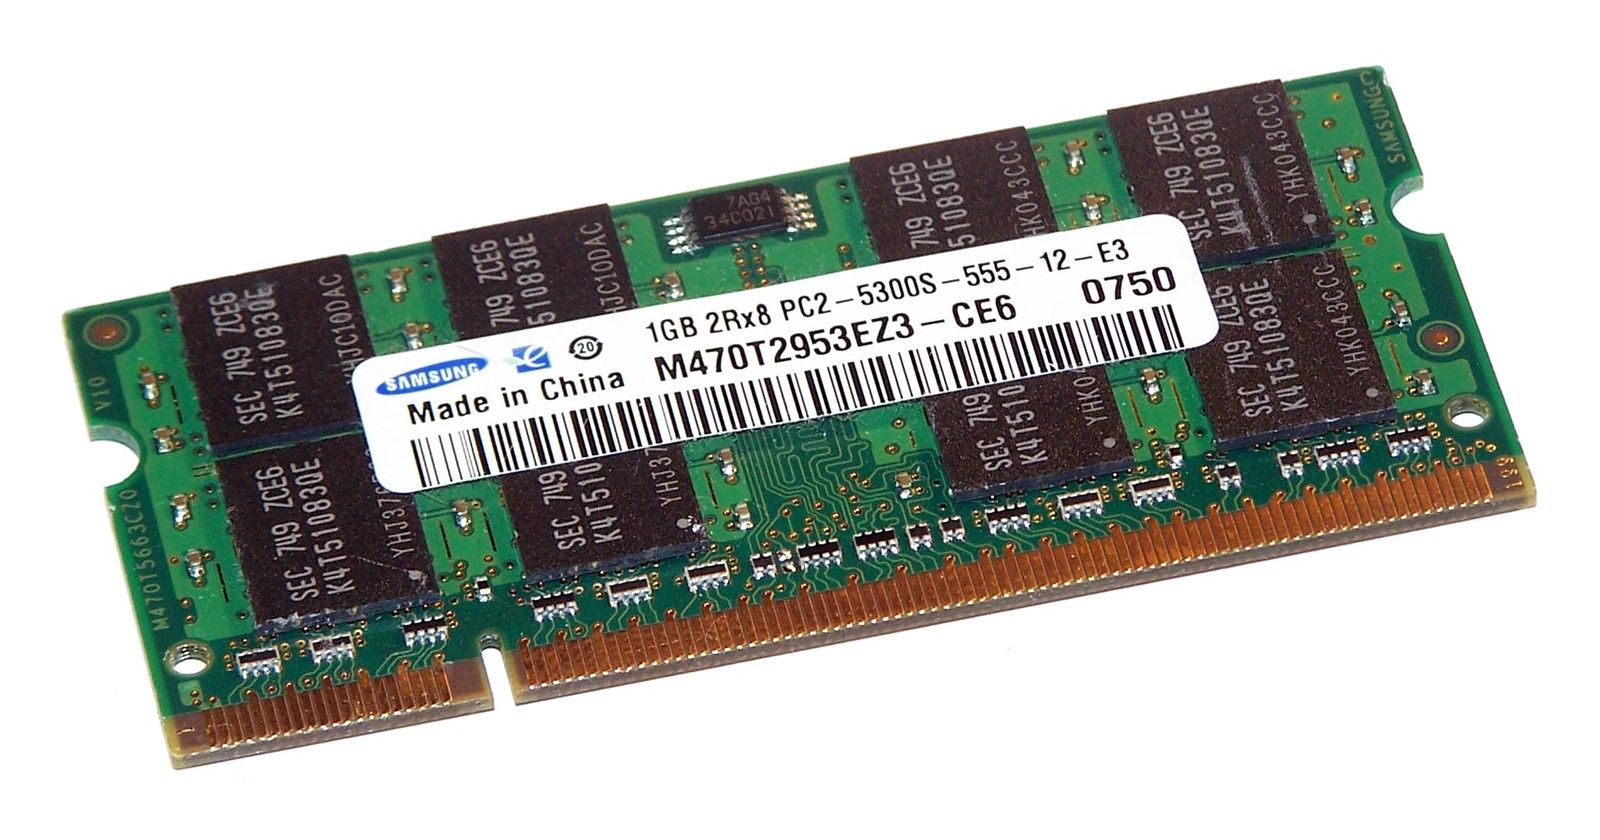 Memorie laptop SO-DIMM DDR2-667 1GB PC2-5300S 200PIN